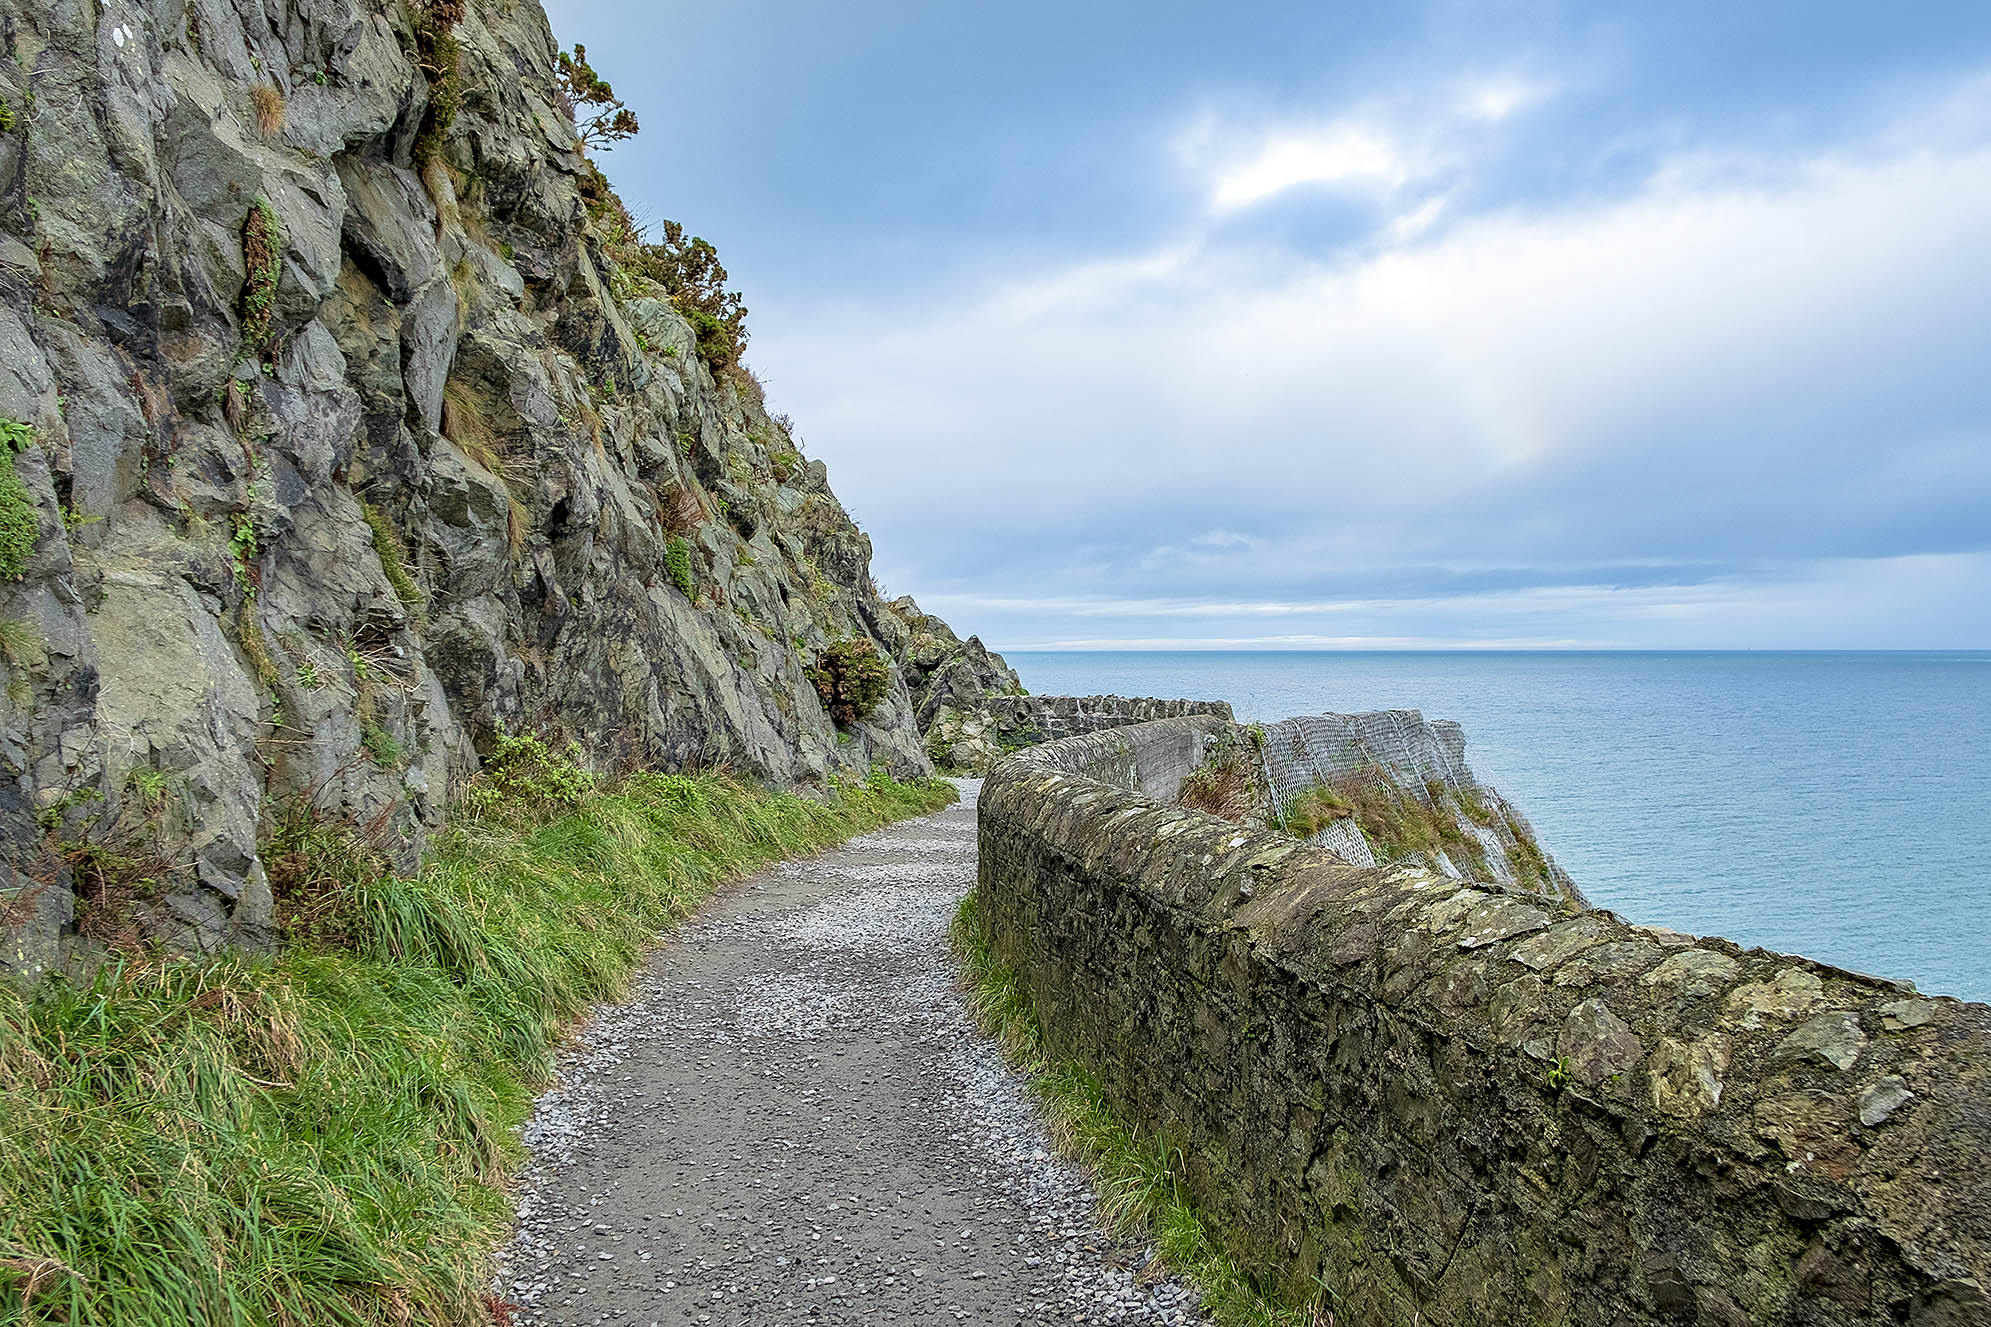 The Cliff Walk